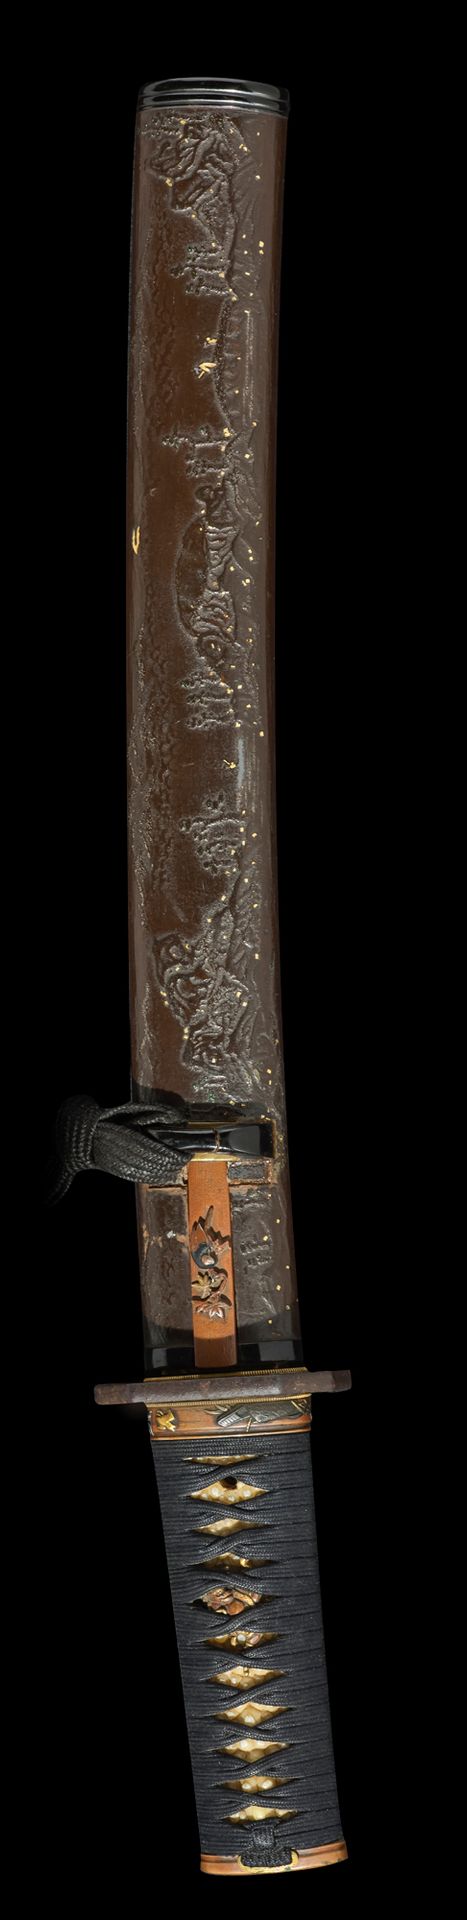 Null 
神道坦途

EDO时期(1603-1868)

签名(mei) : 清秀(no) ju Sengo Masashige



刀片(sugata) &hellip;